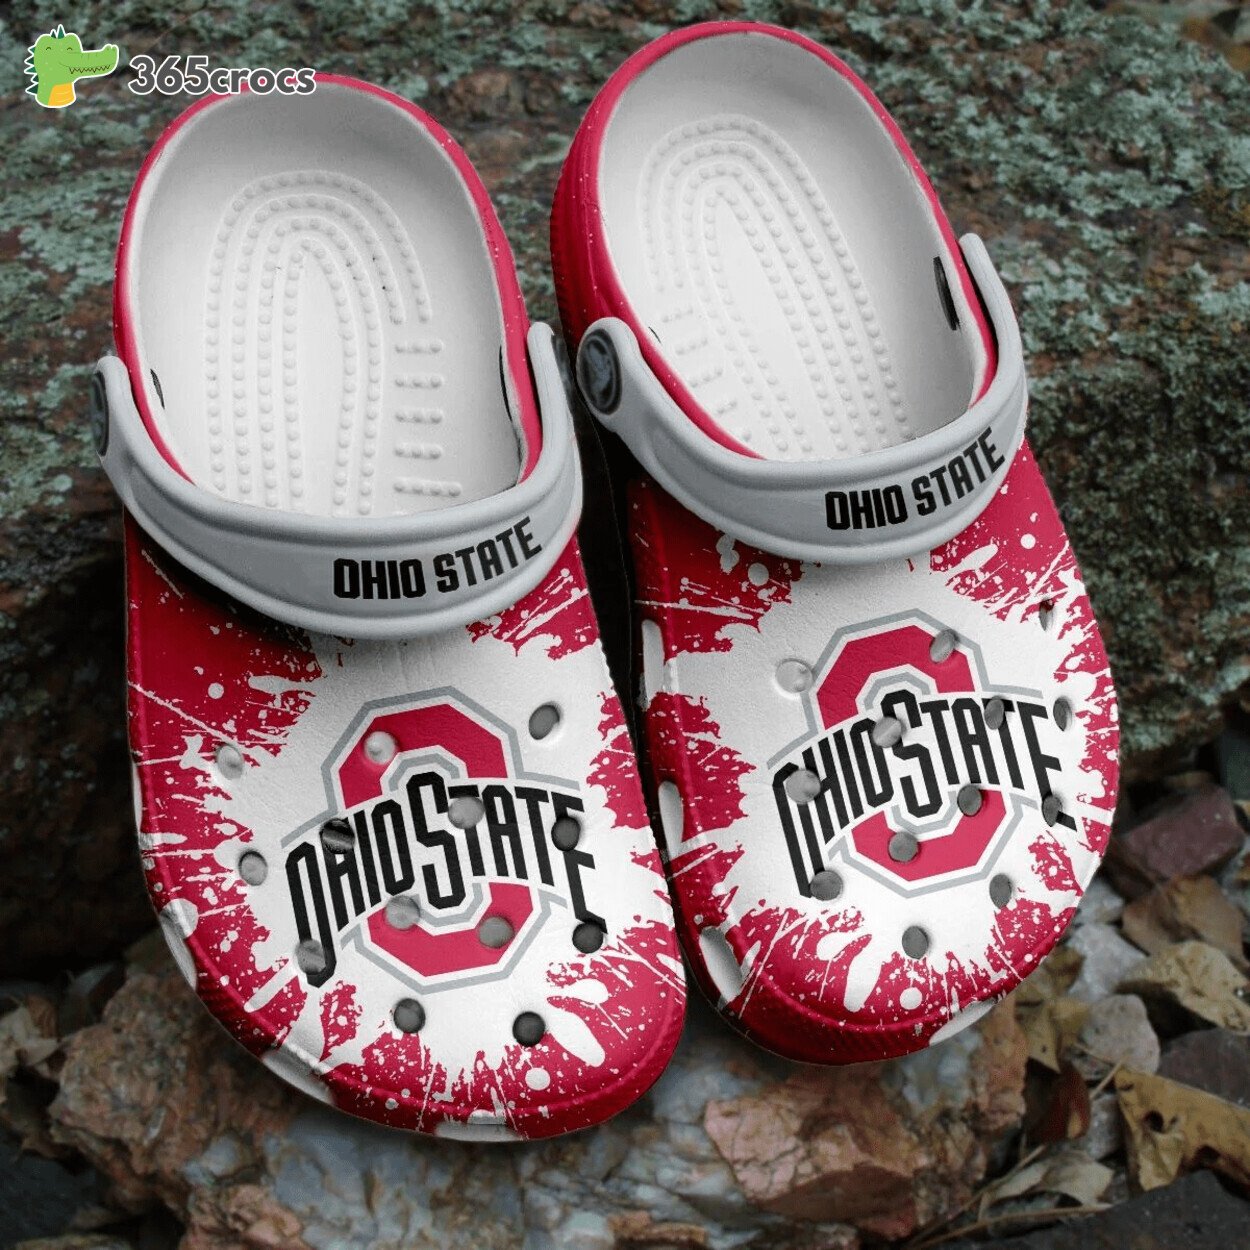 Celebrate Collegiate Pride Ohio State NCAA Inspired Comfortable Clog Footwear